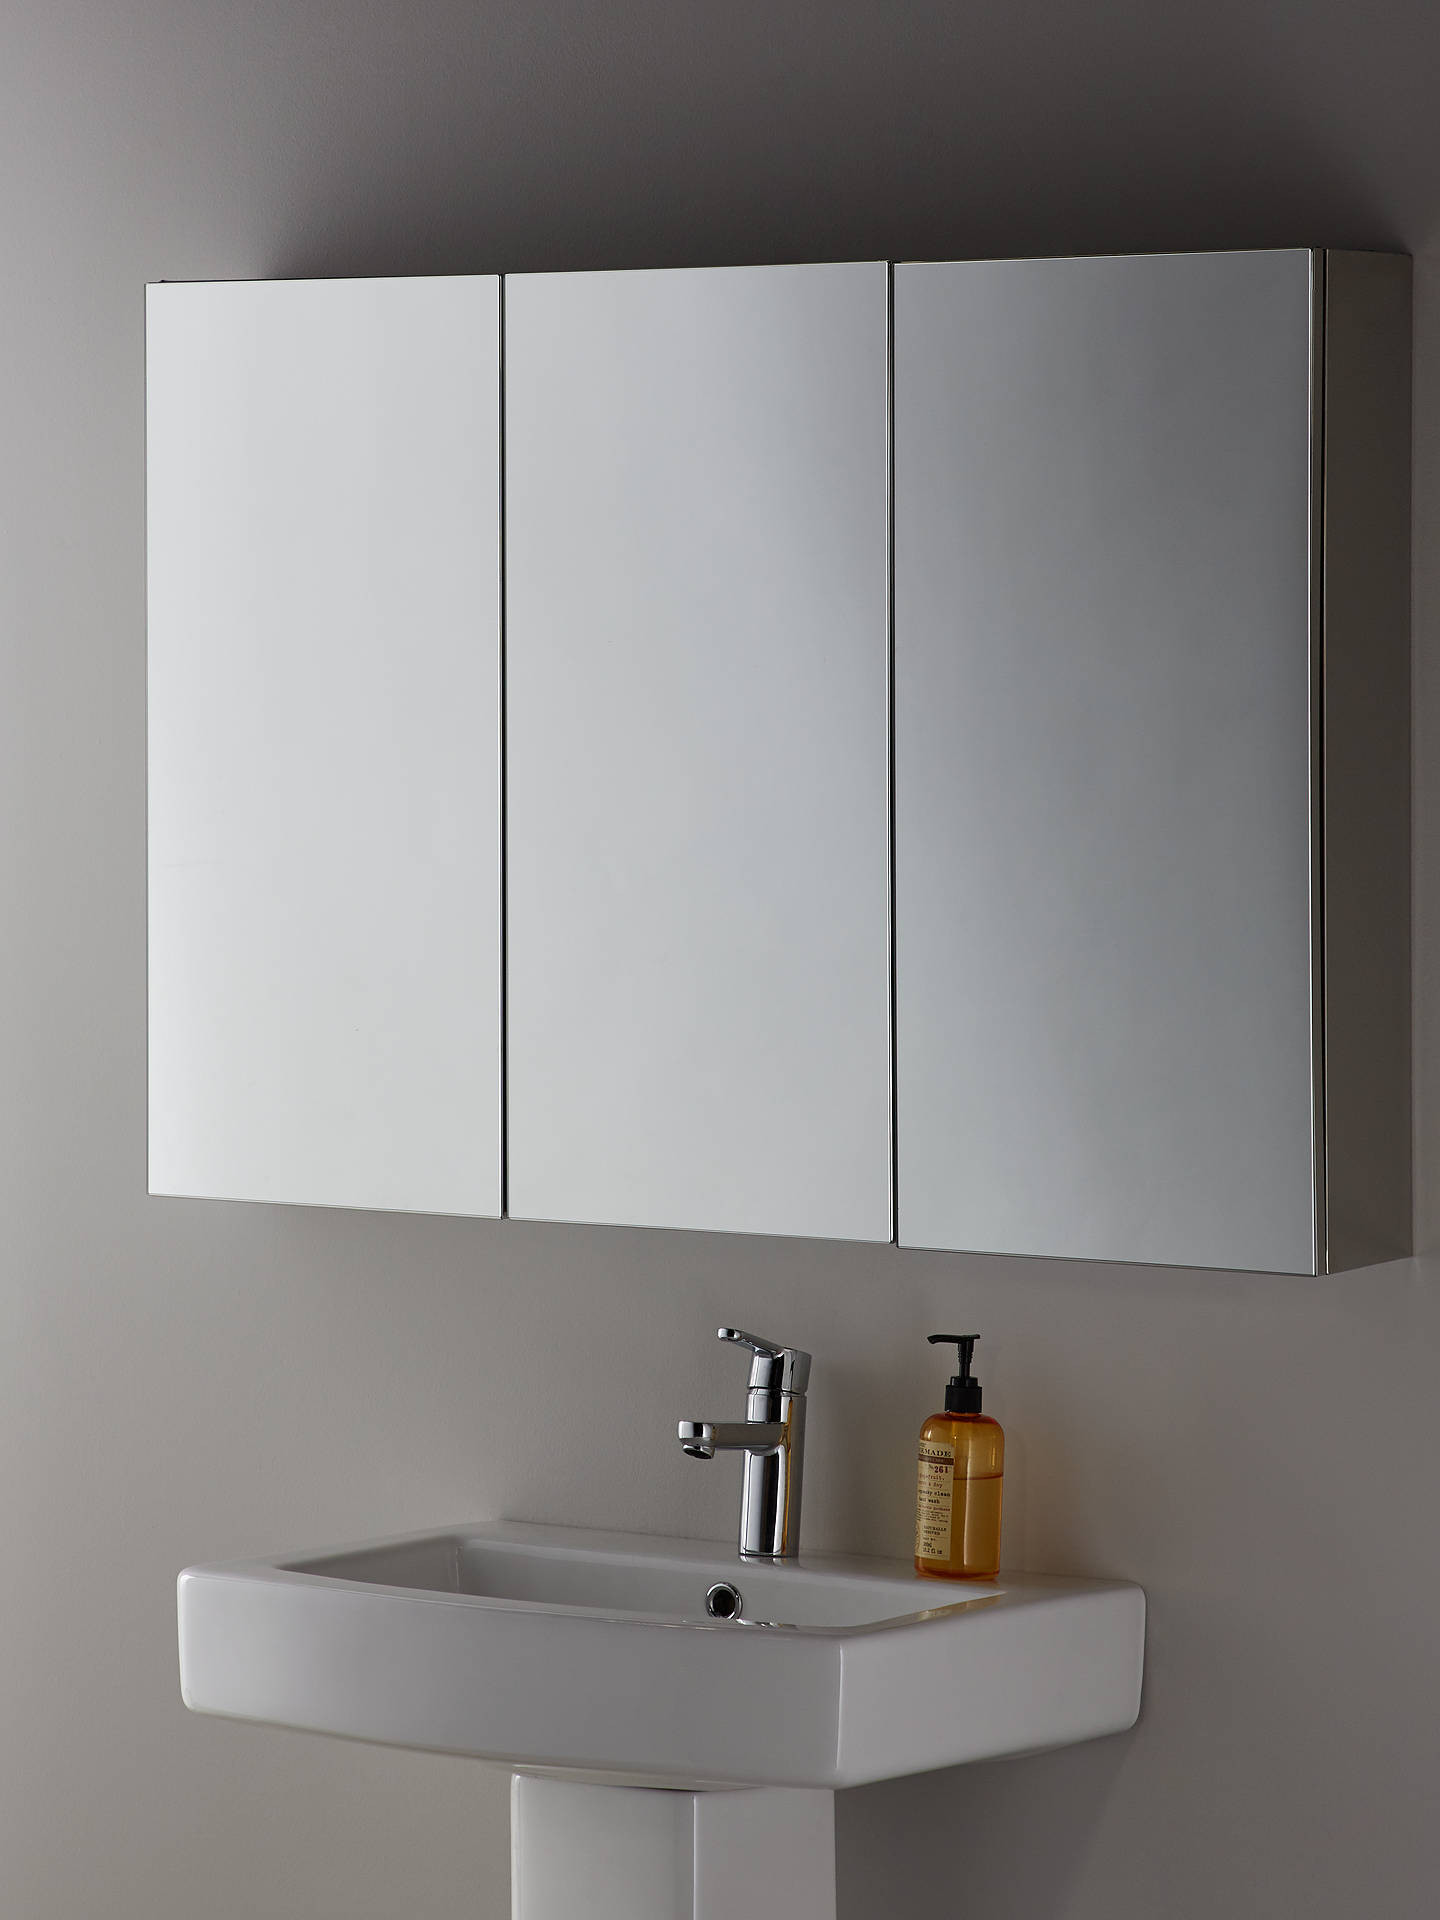 Bathroom Cabinet Mirrors
 John Lewis & Partners Triple Mirrored Bathroom Cabinet